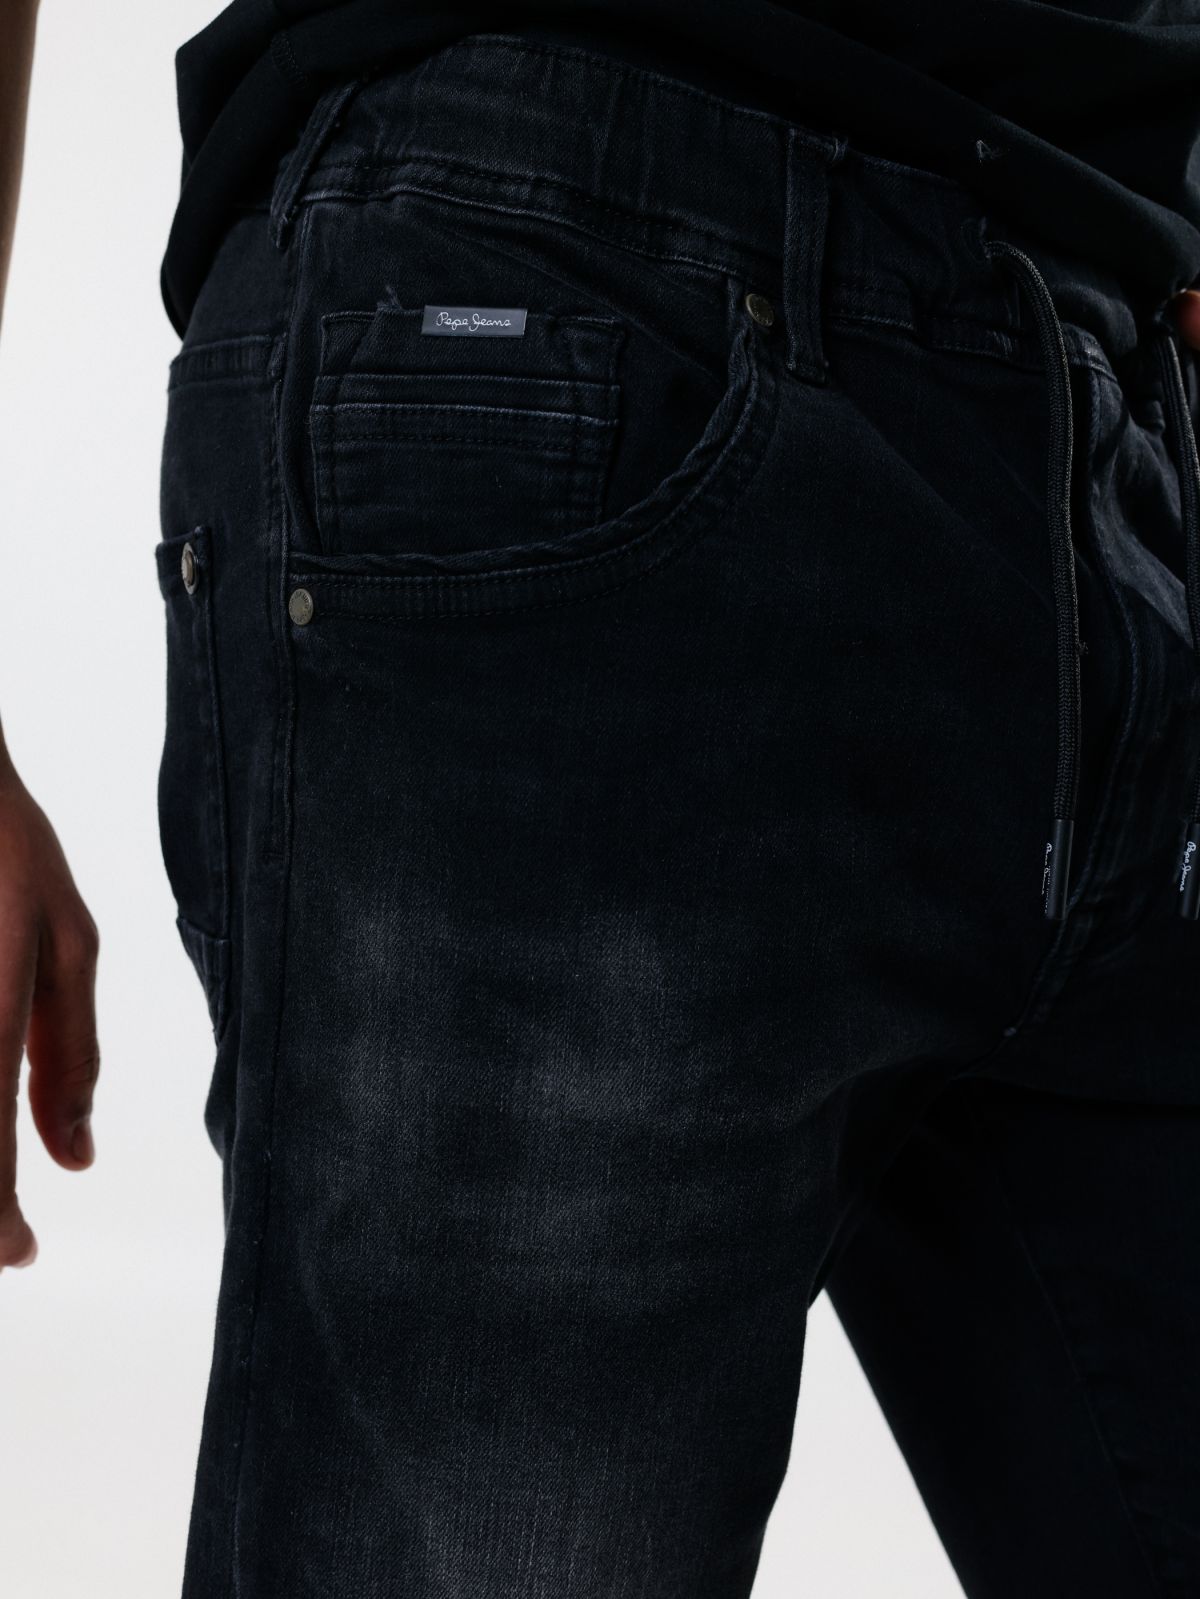  מכנסיי ג'ינס קצרים ווש של PEPE JEANS